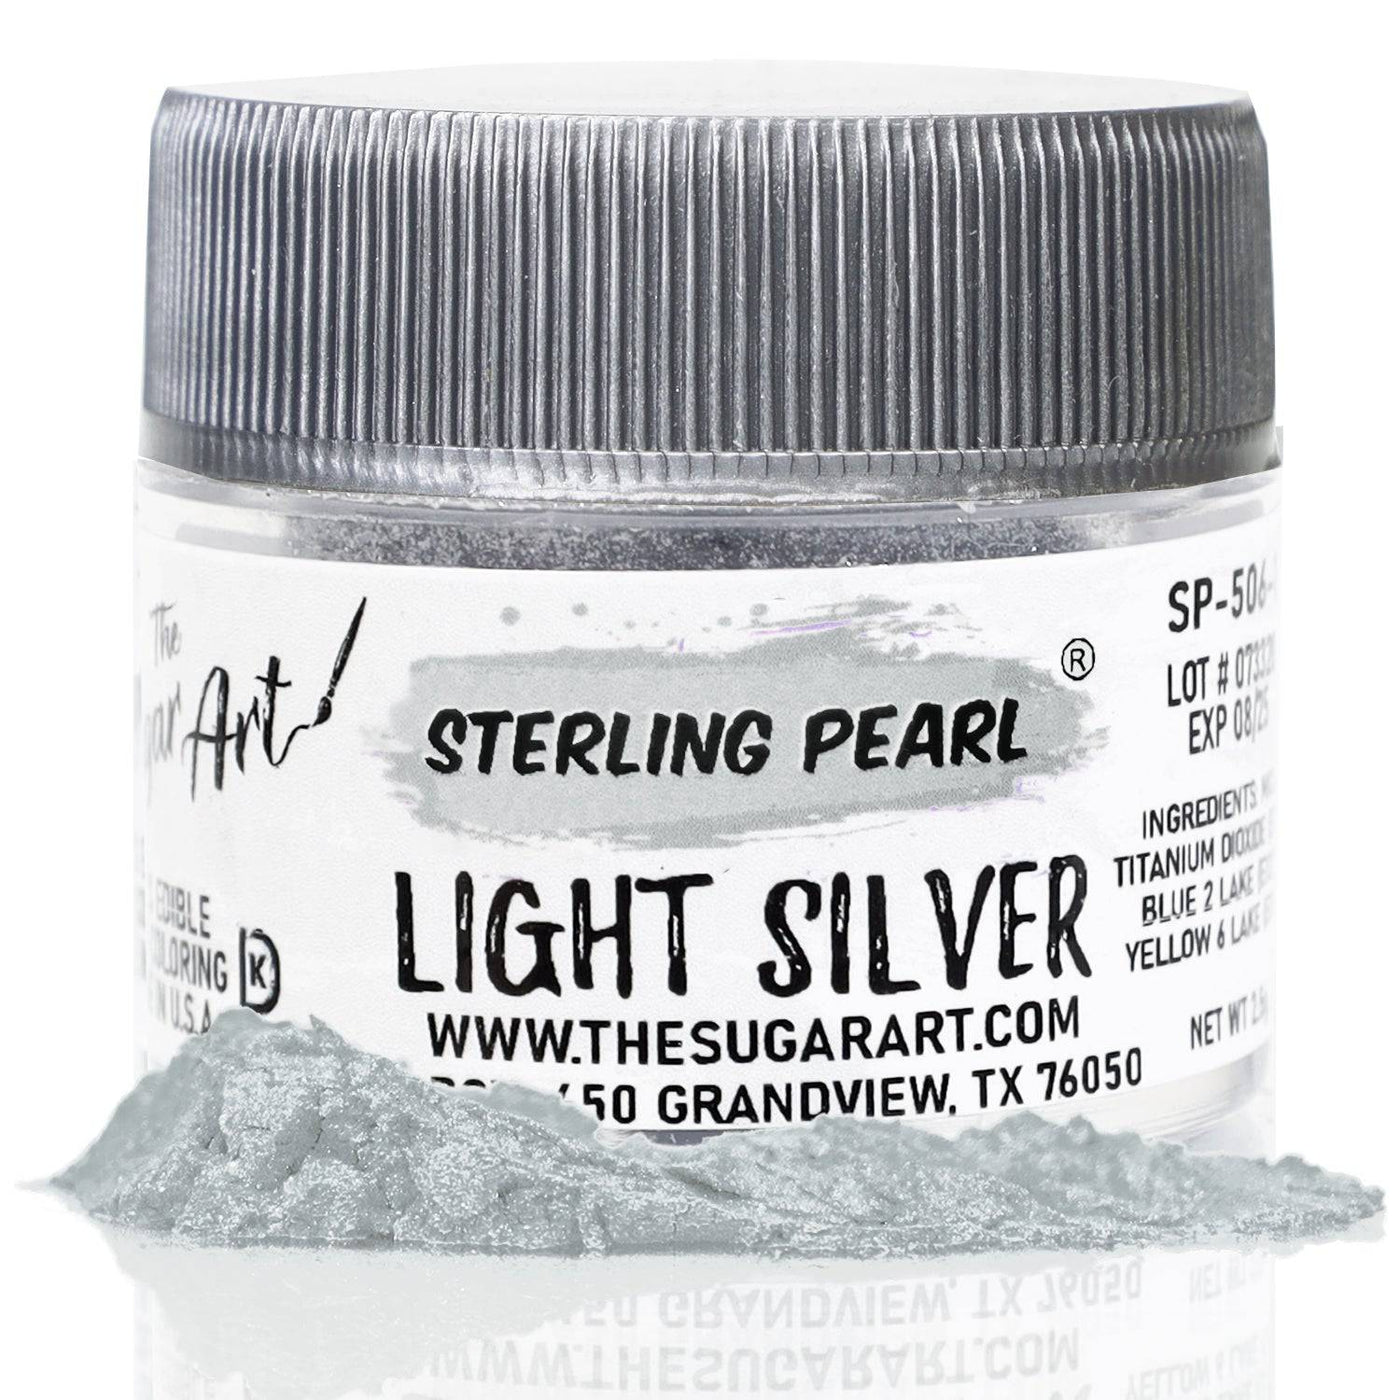 Light Silver - The Sugar Art, Inc.